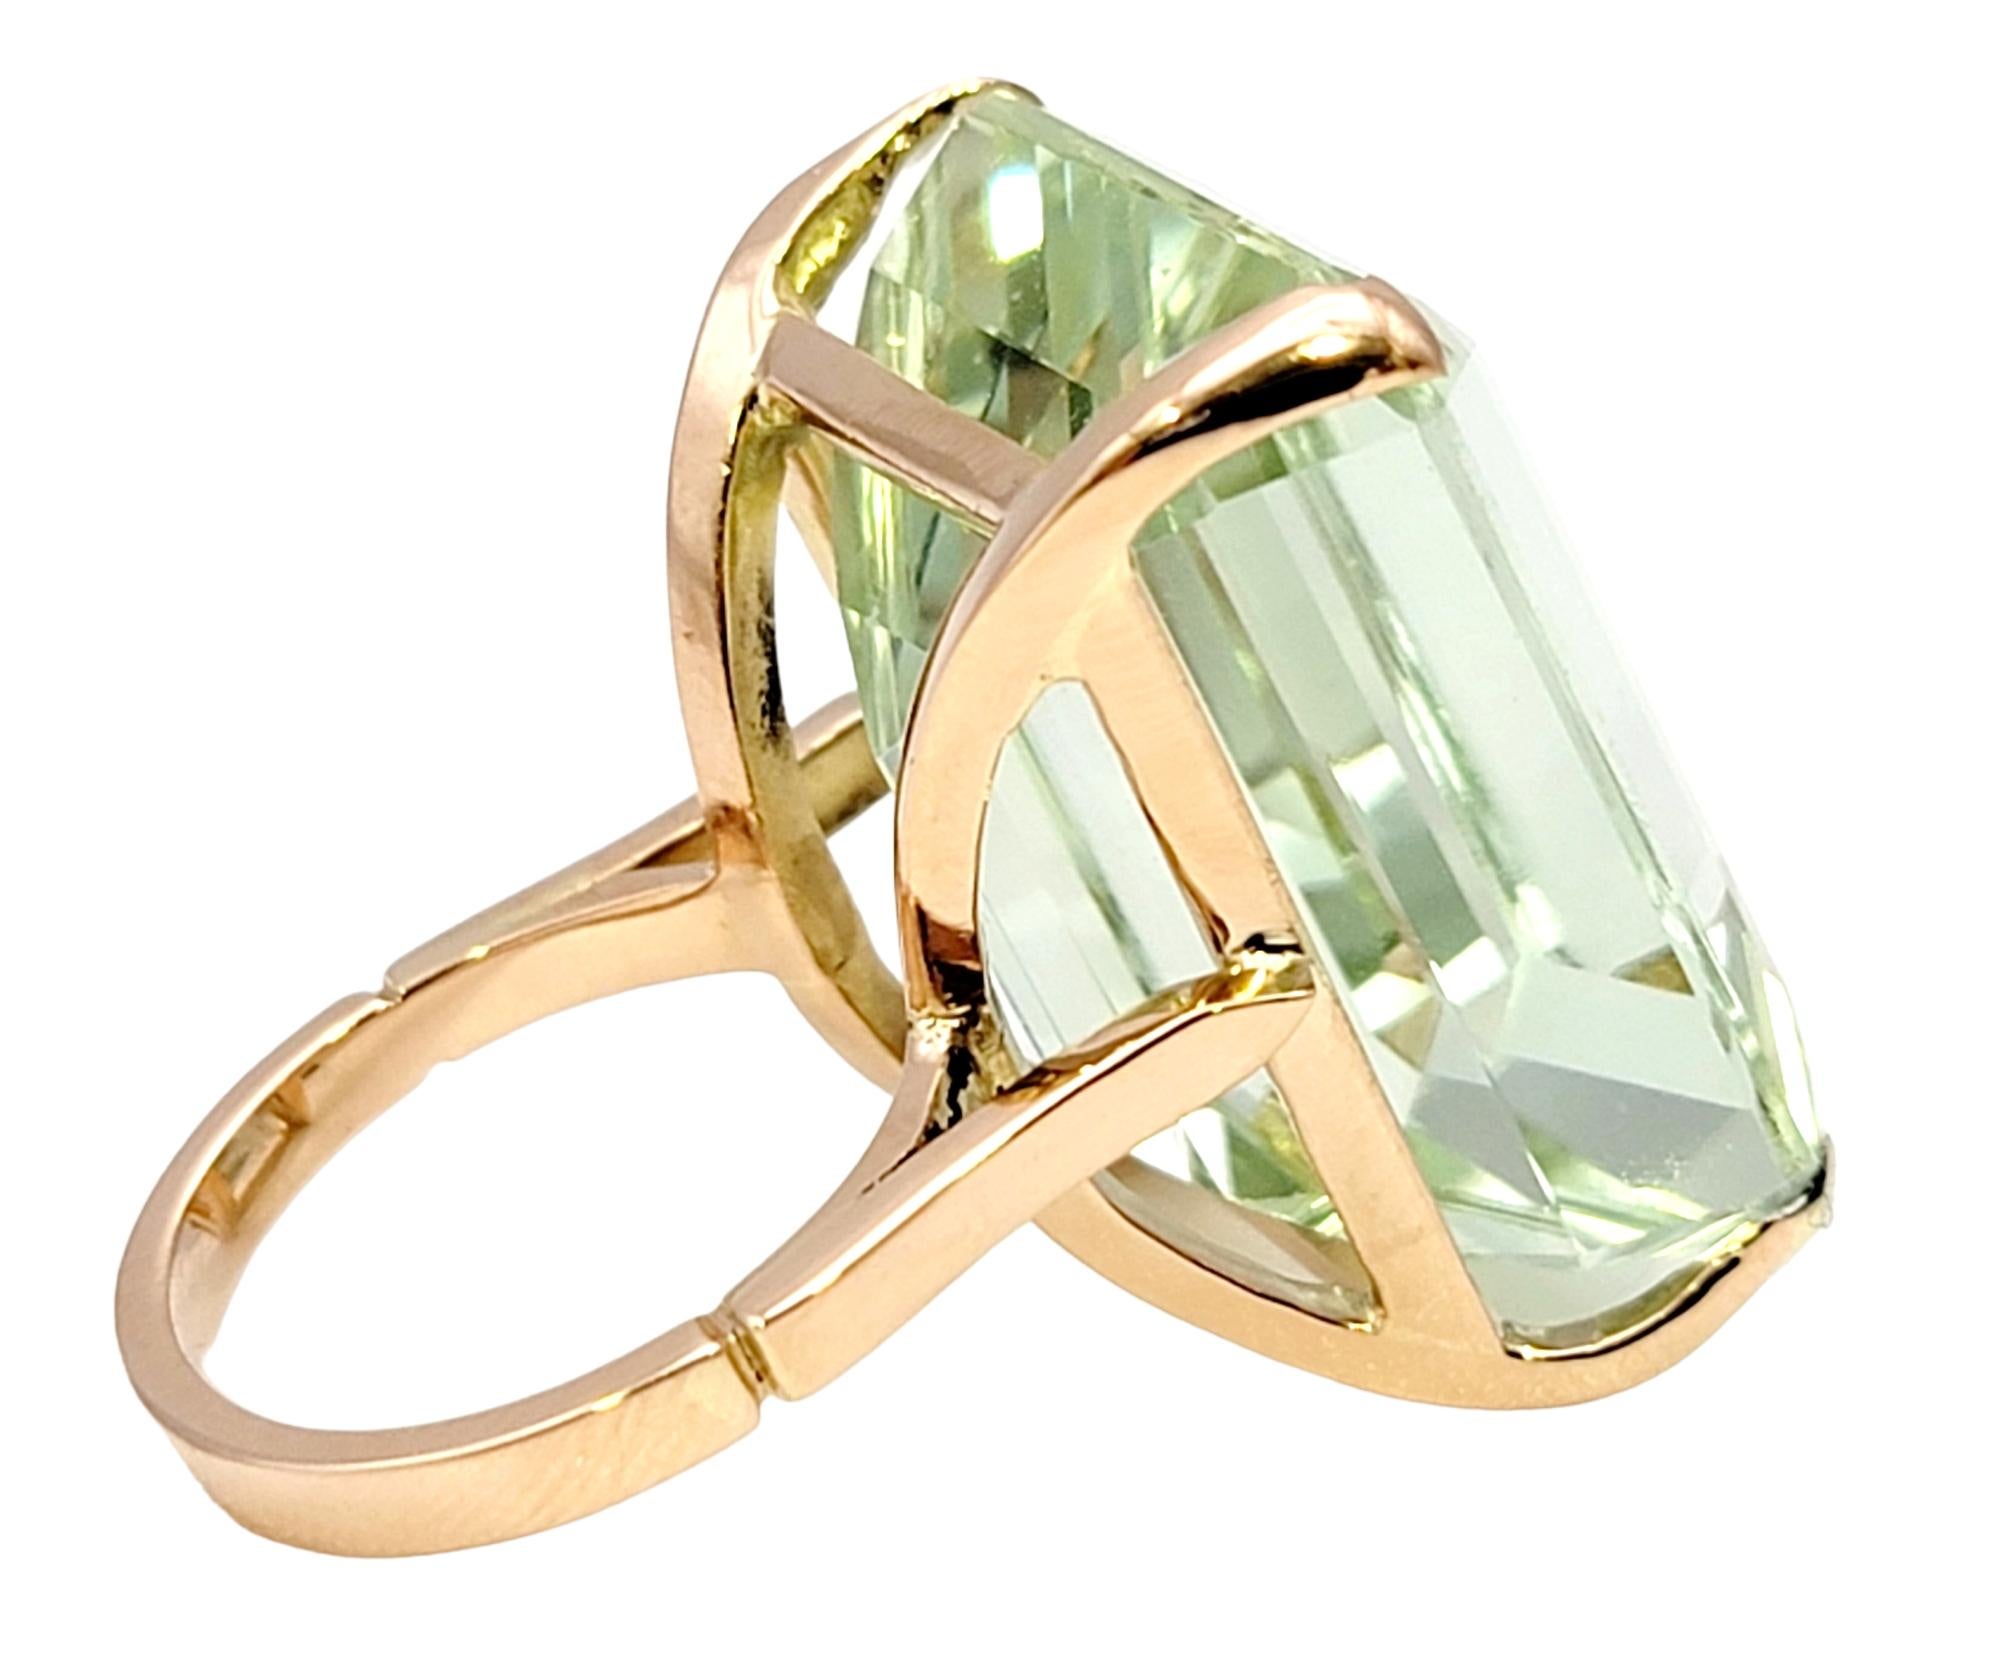 Huge 46.21 Carat Emerald Cut Unheated Aquamarine Ring in 14 Karat Rose Gold  For Sale 1